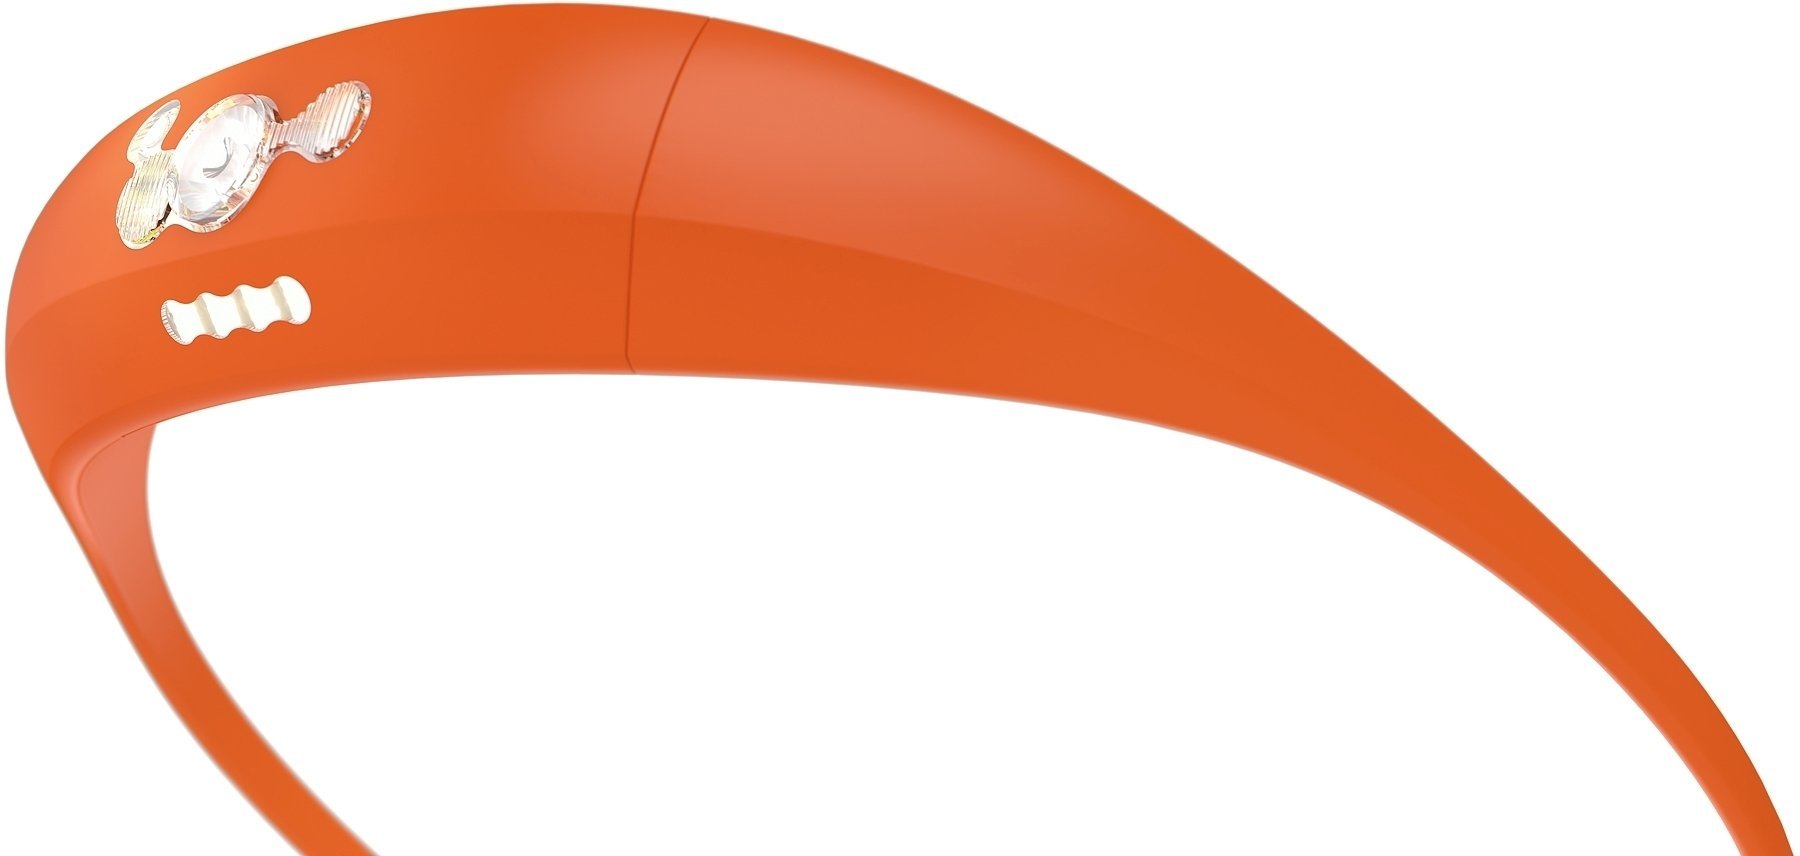 Headlamp Knog Bandicoot Orange 100 lm Headlamp Headlamp